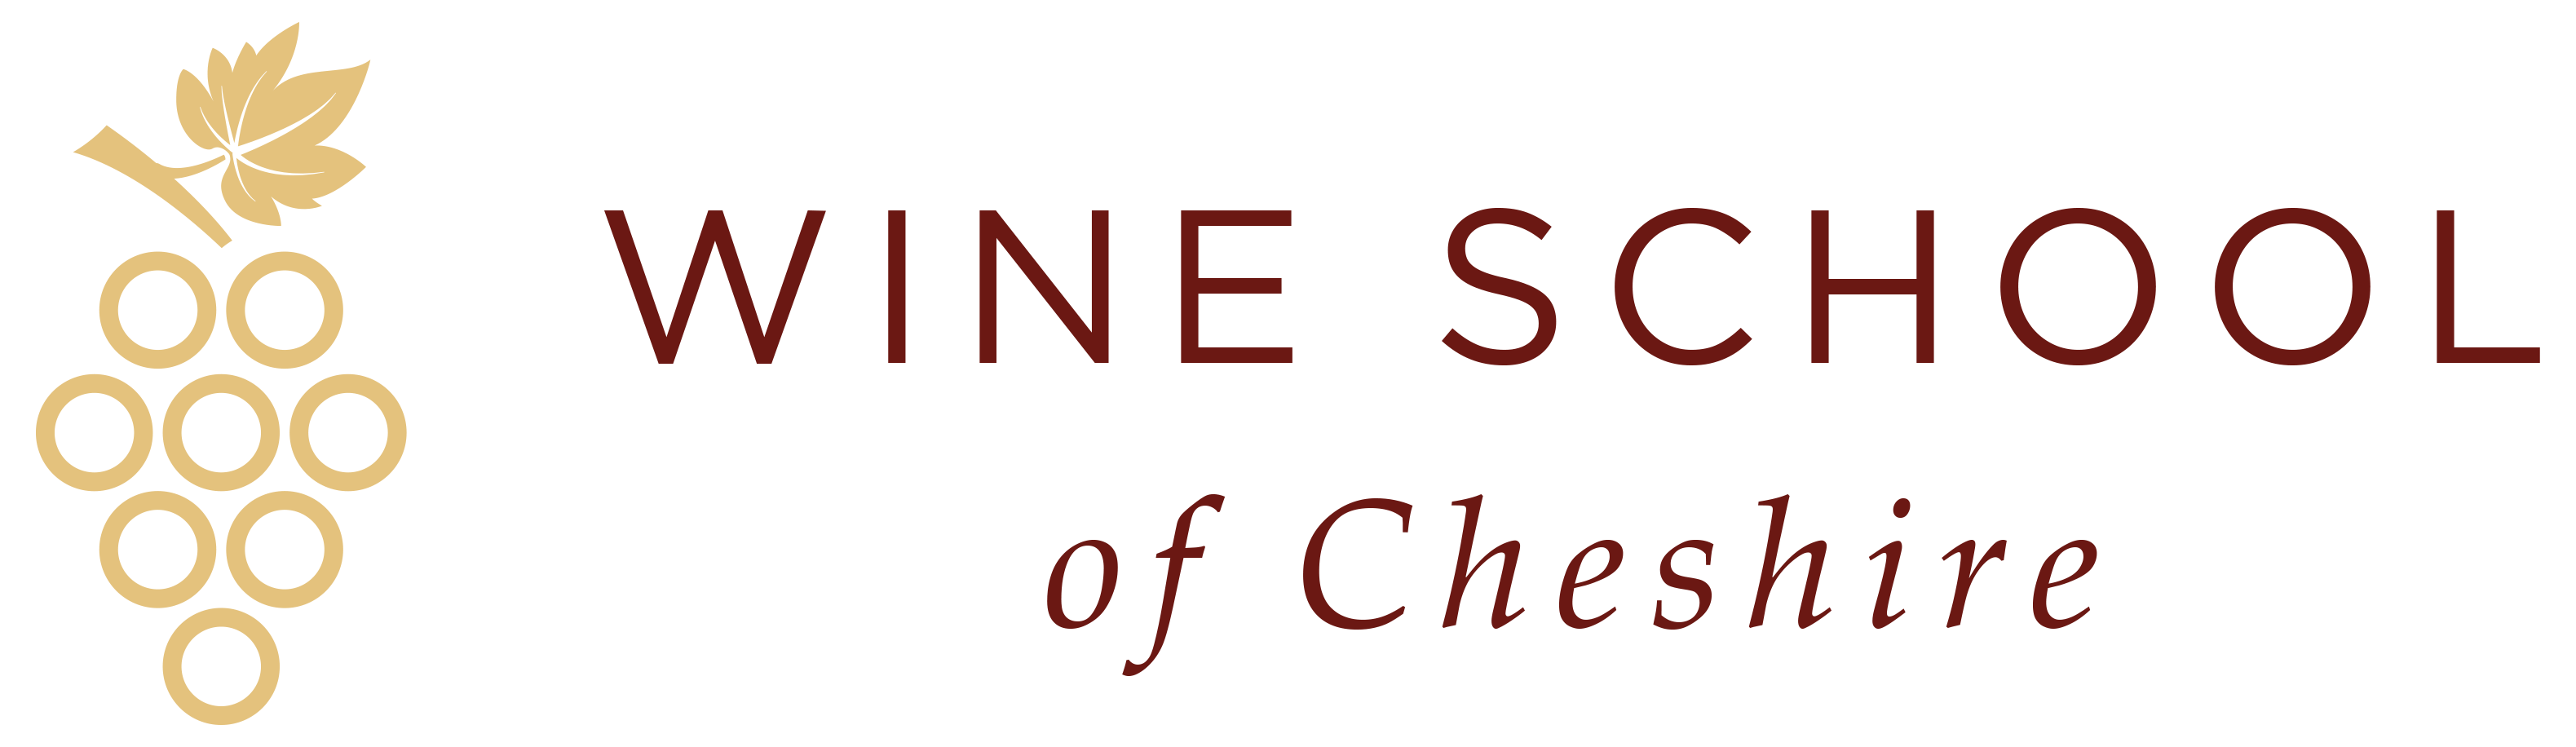 Wine School Of Cheshire logo